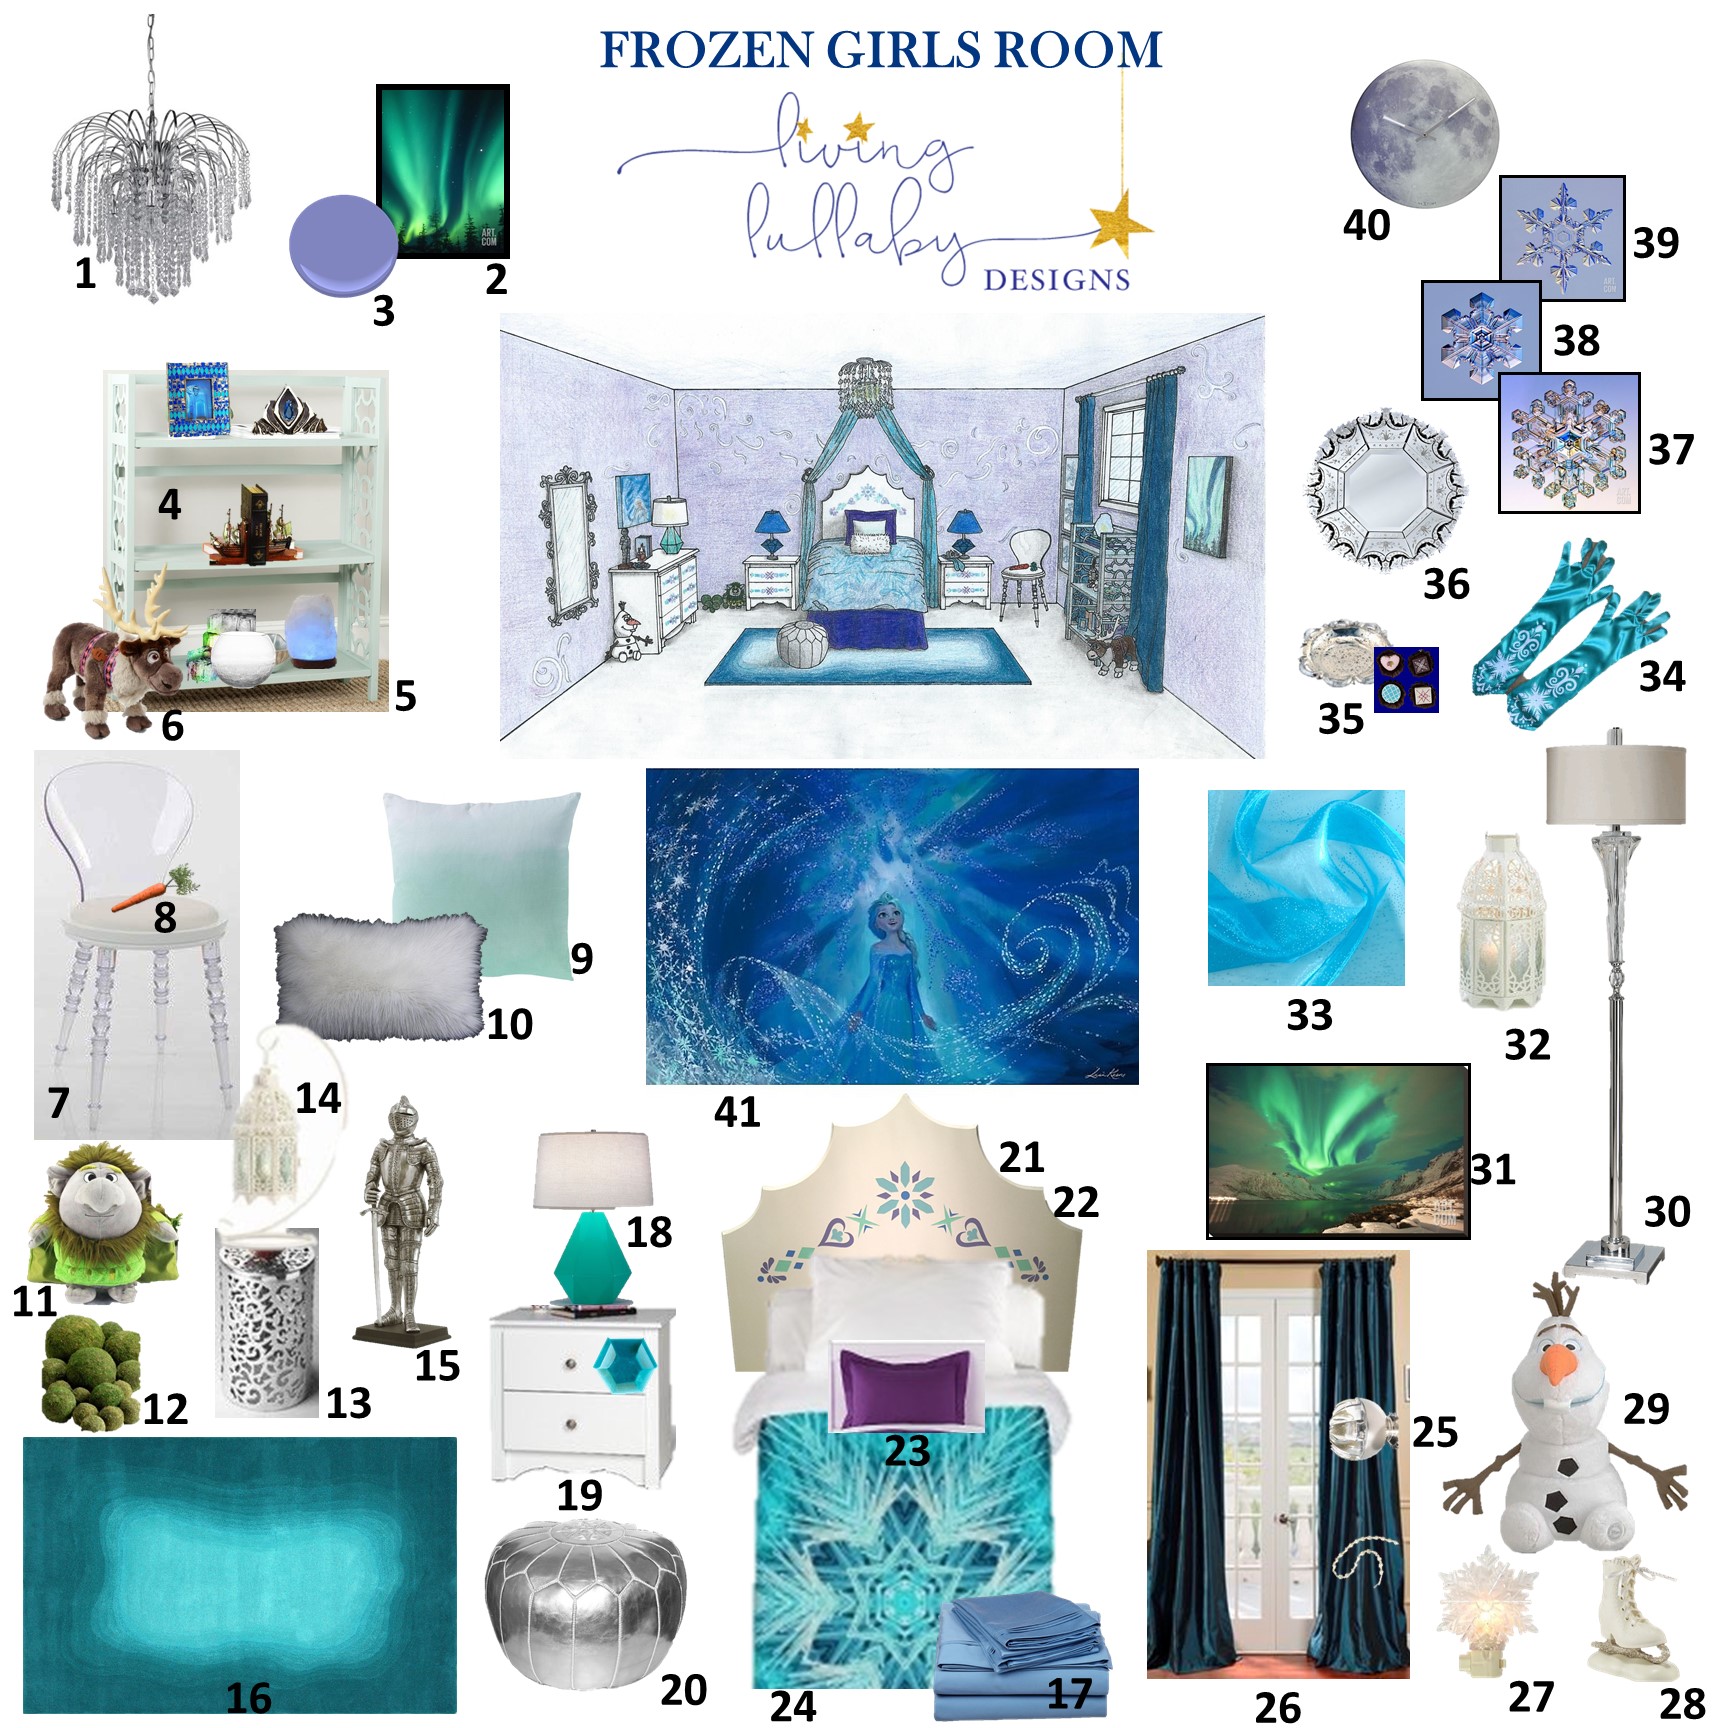 Frozen Girl's Room - Living Lullaby Designs